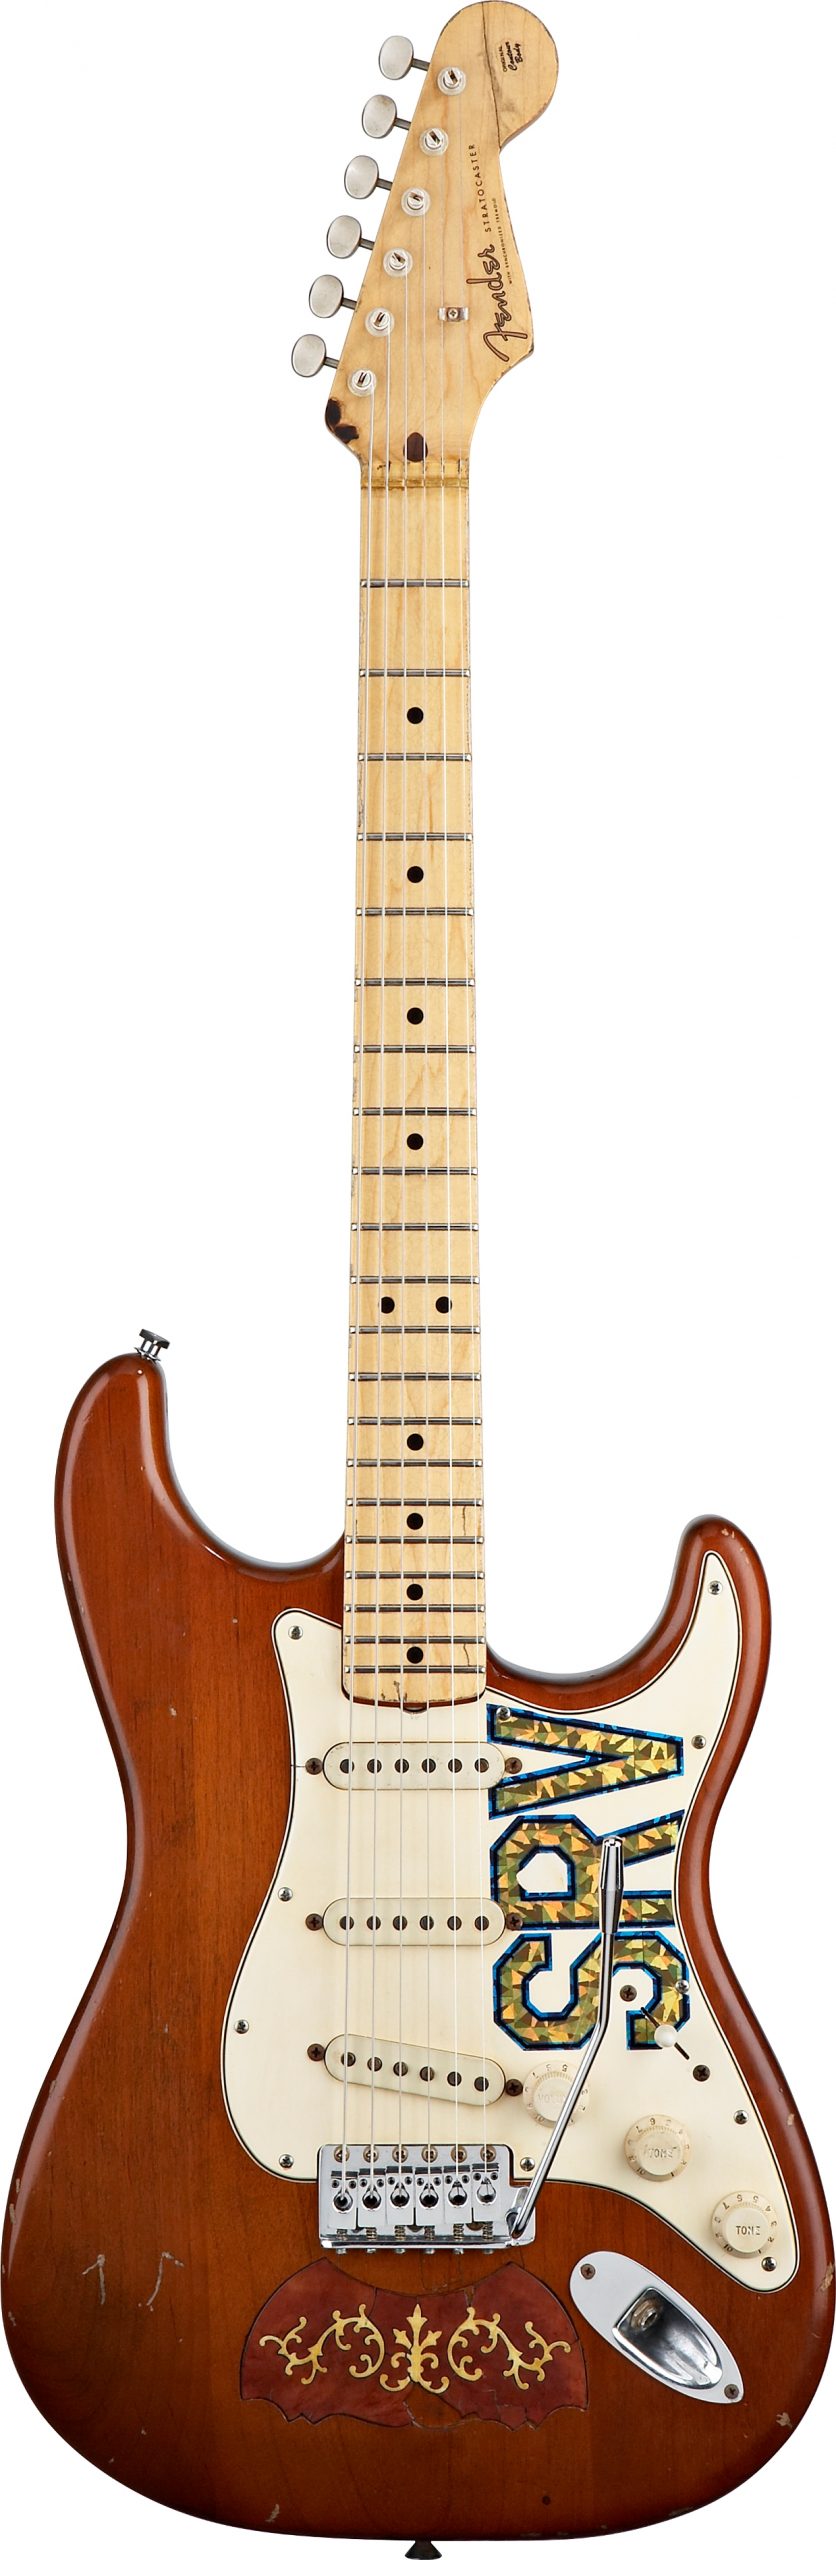 Fender Stevie Ray Lenny reproduction strat